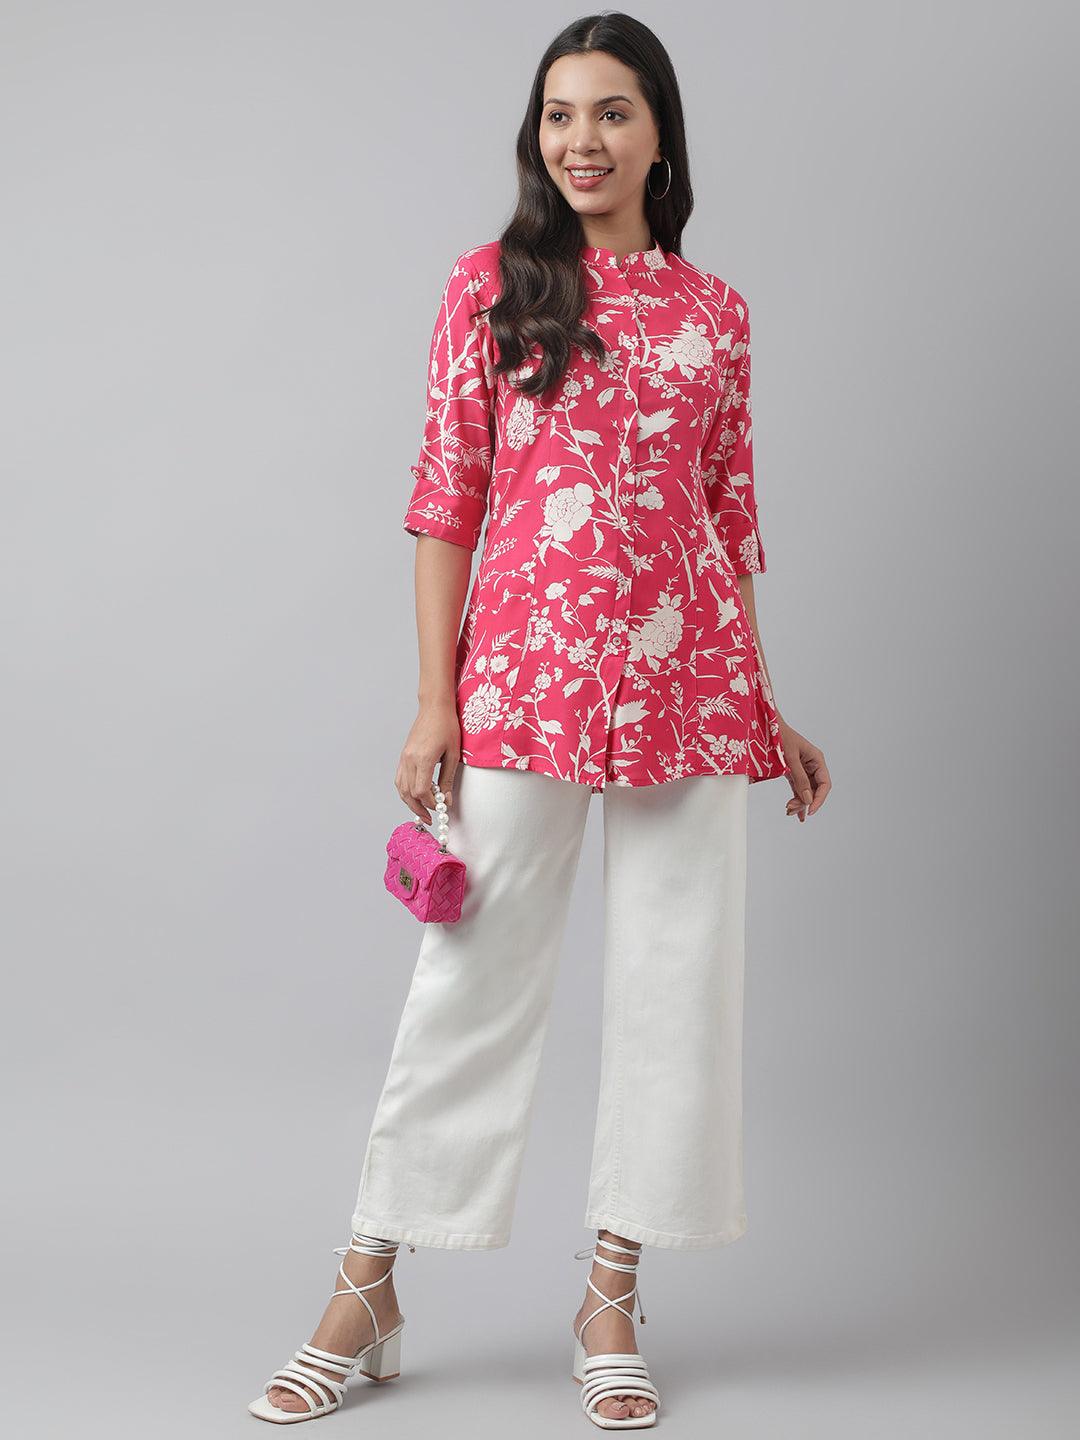 Divena Hot Pink Floral Printed Rayon A-line Shirt Style Top - divena world